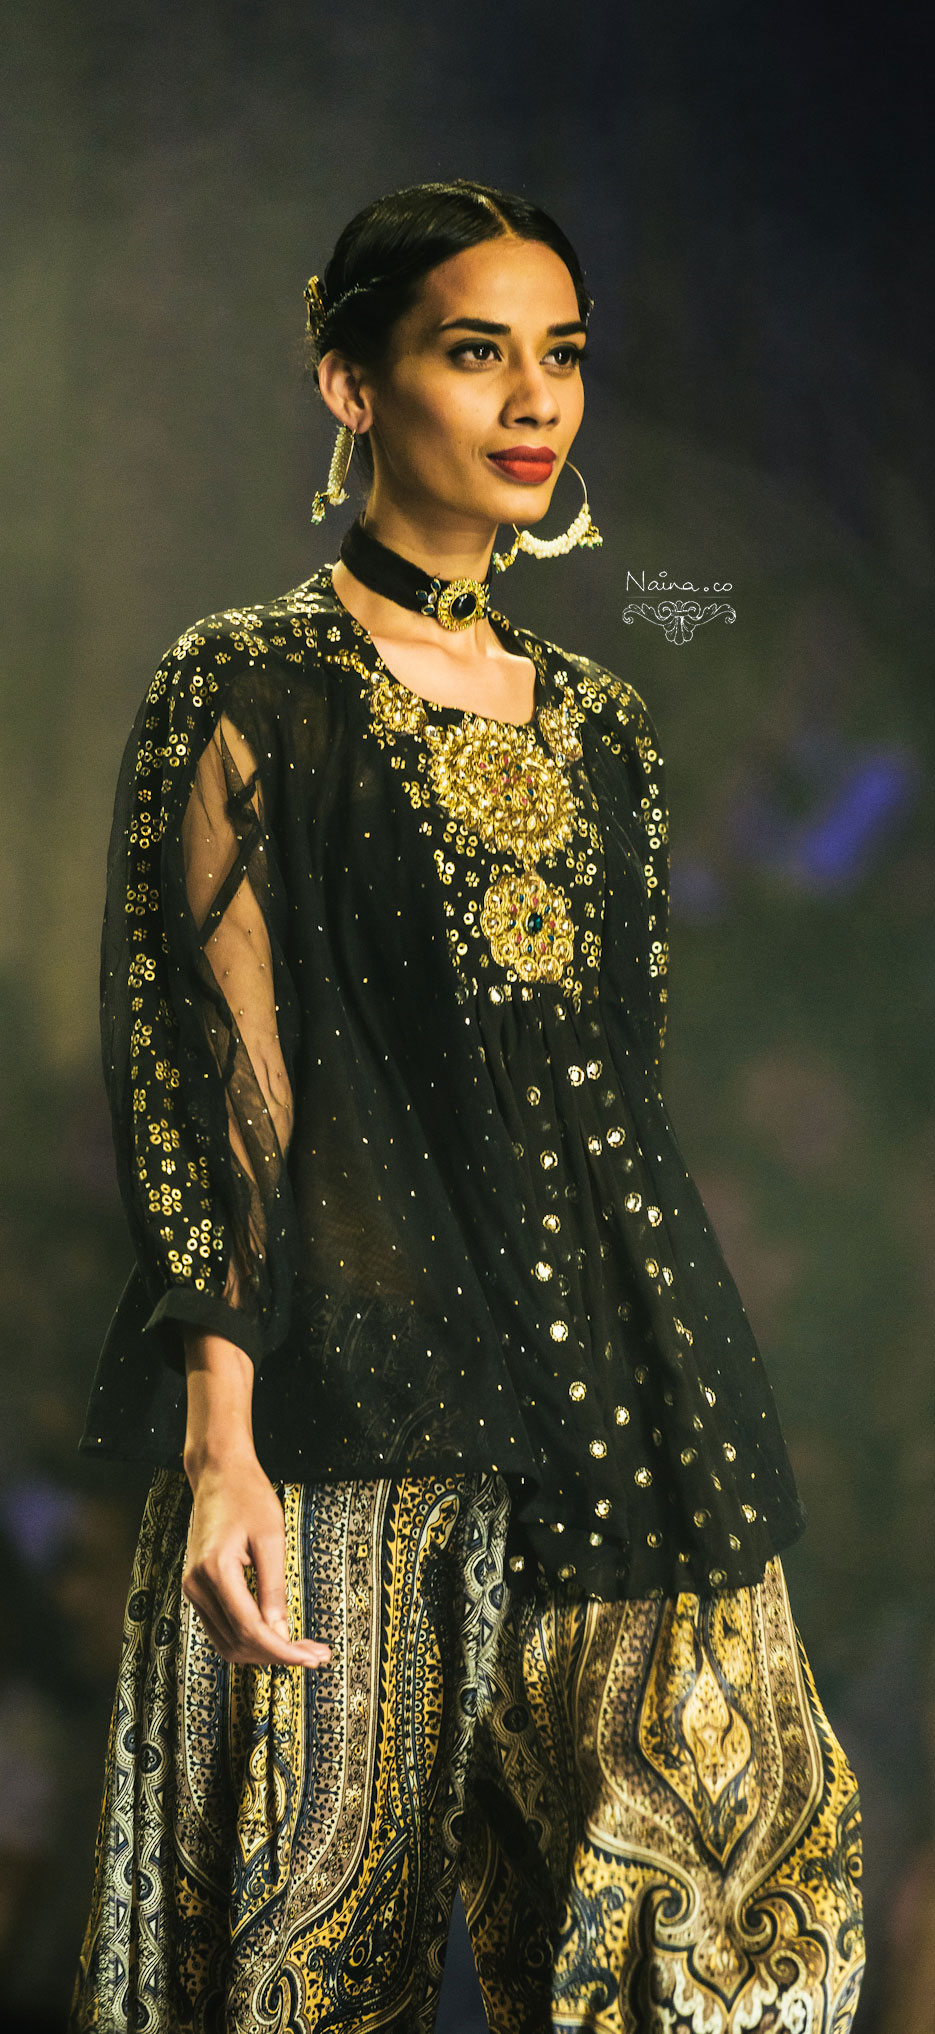 Wills Lifestyle India Fashion Week, Spring Summer 2013. Ritu Kumar Grand Finale by photographer Naina Redhu of Naina.co